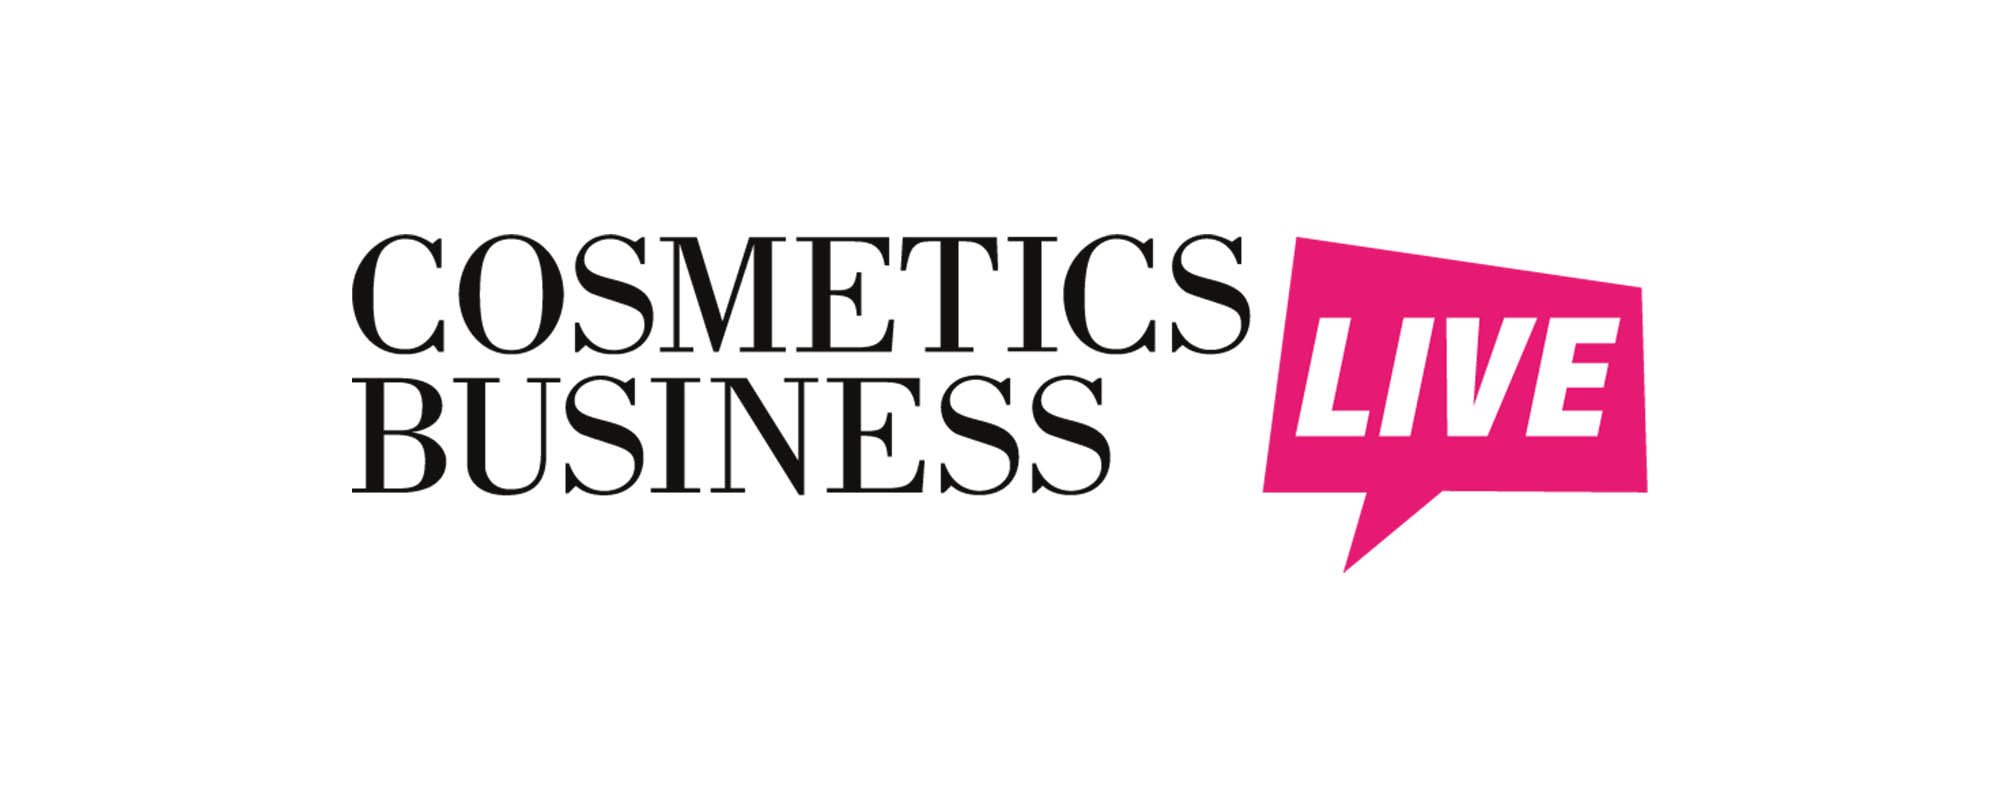 Cosmetics Business Logo.jpg